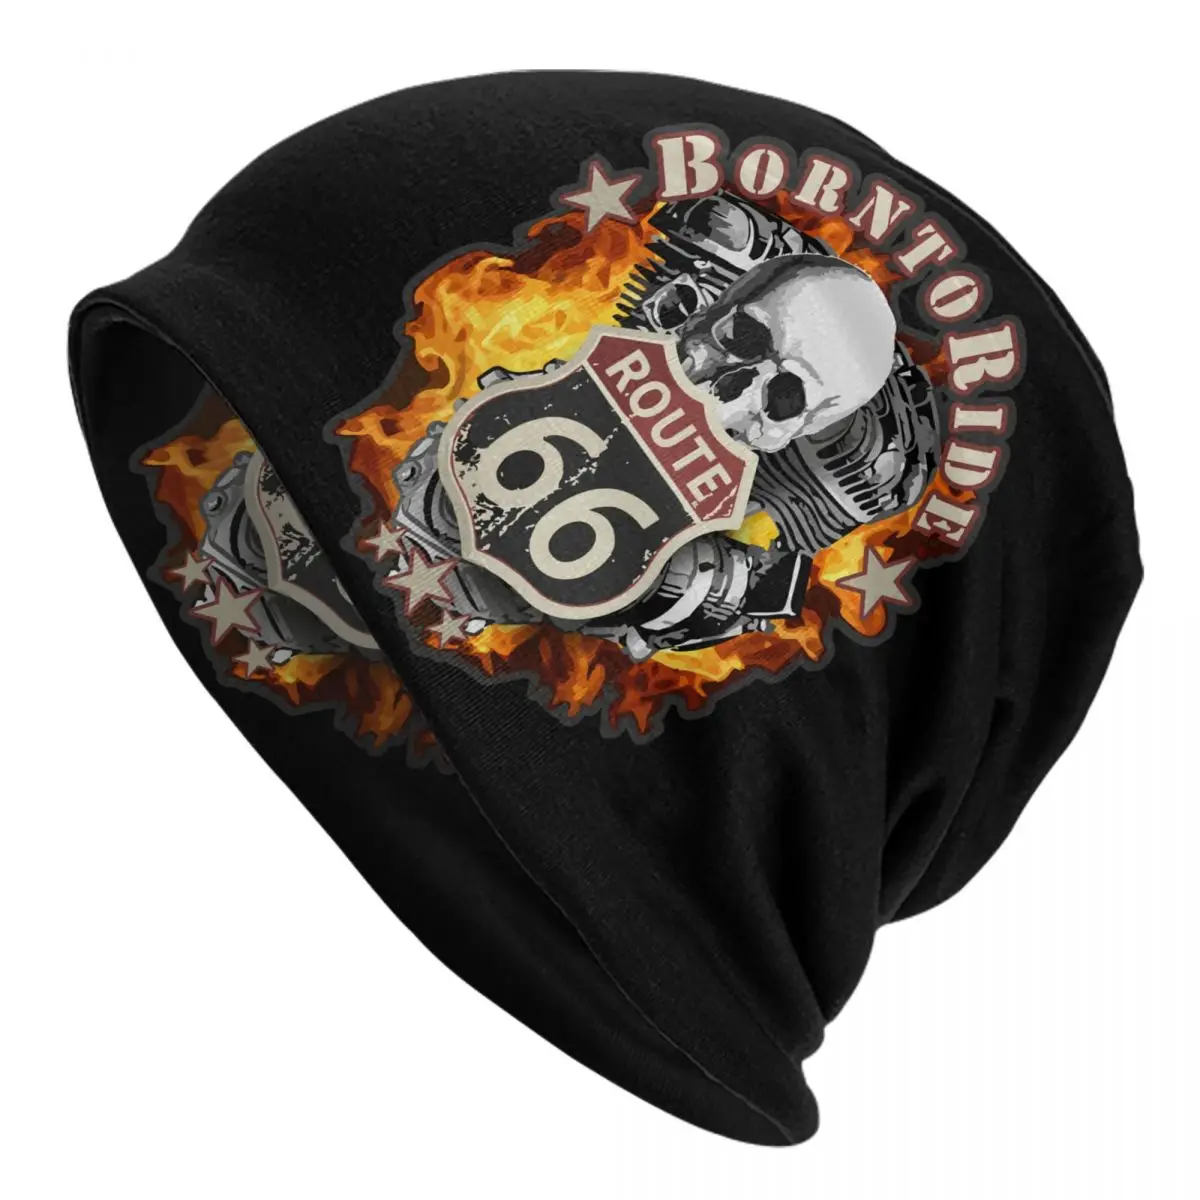 

Born To Ride Skull Bonnet Hats Street Knit Hat For Women Men Winter Warm Route 66 Skullies Beanies Caps